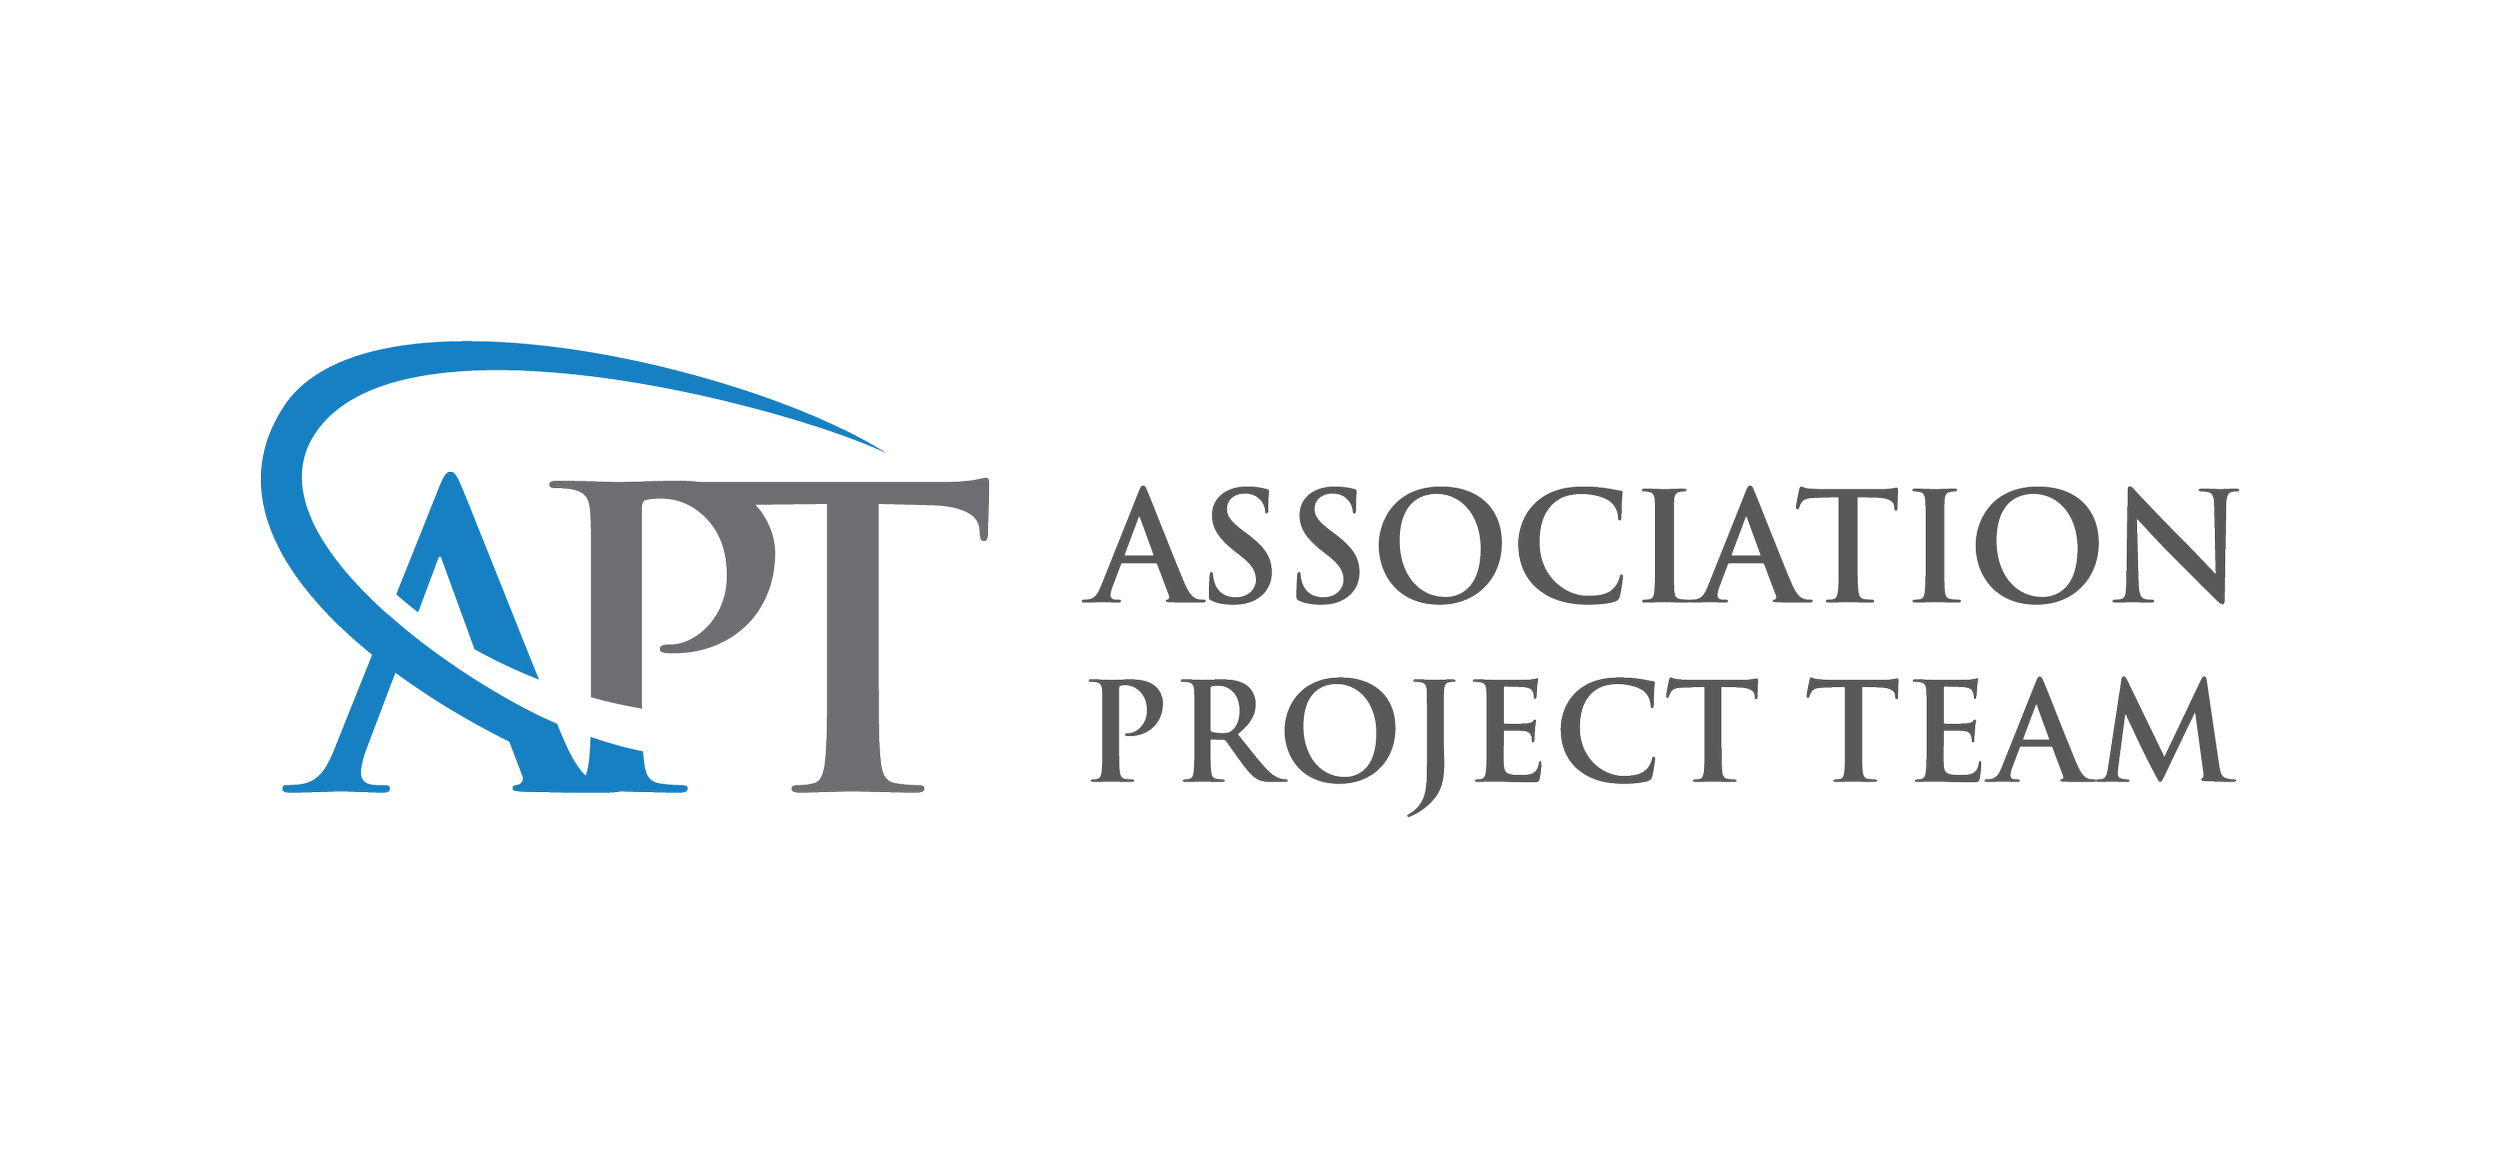 APT - Association Project Team